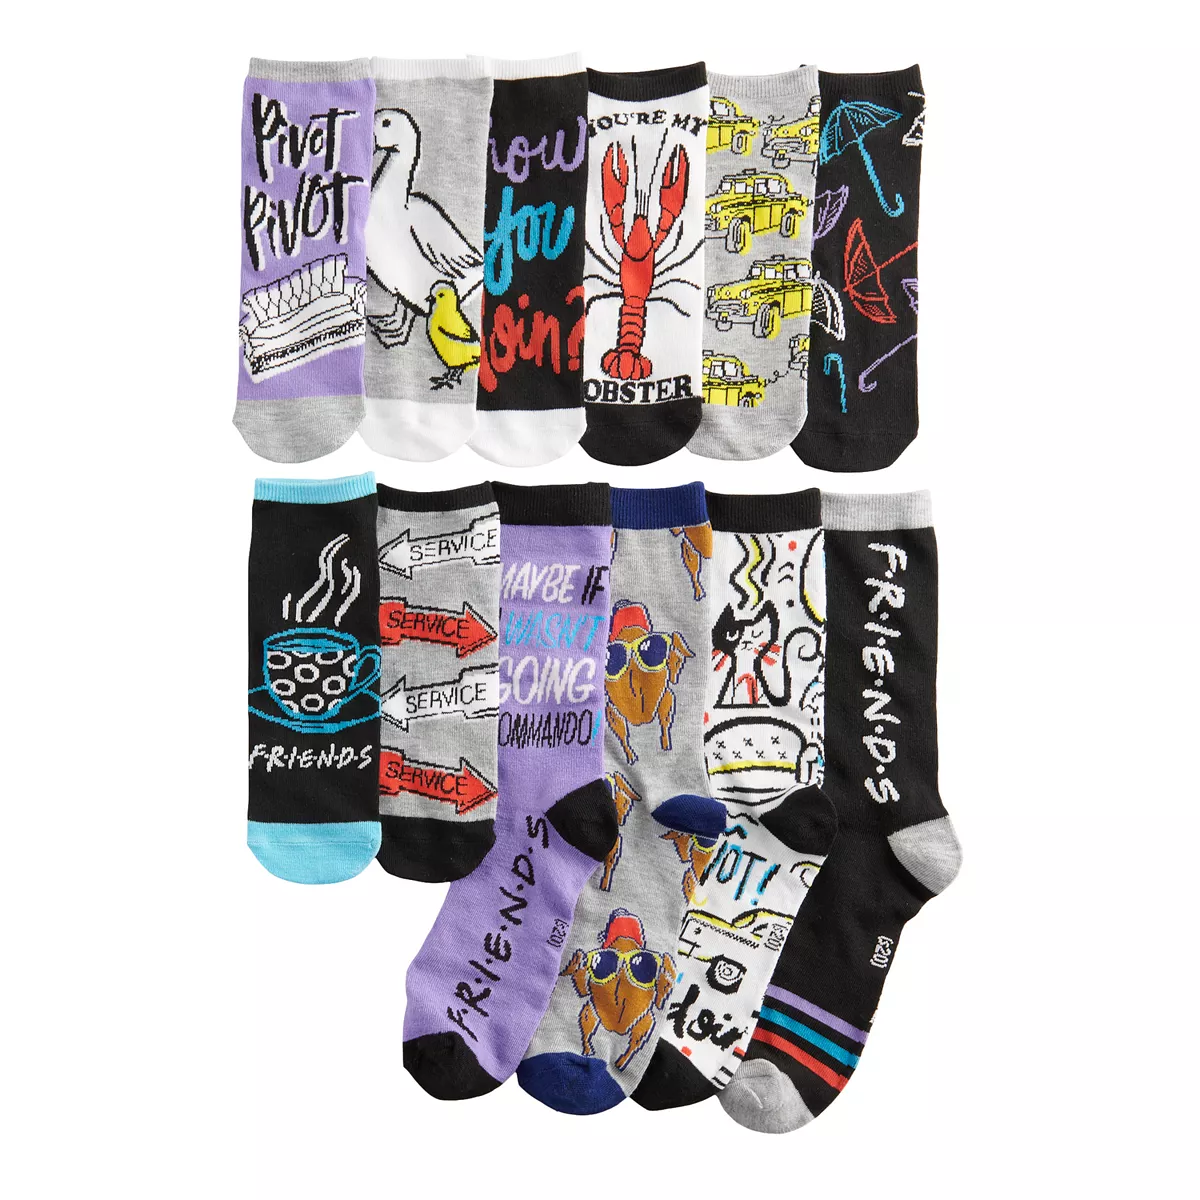 2020 Friends Socks Advent Calendar Available Now! {Men's} Hello